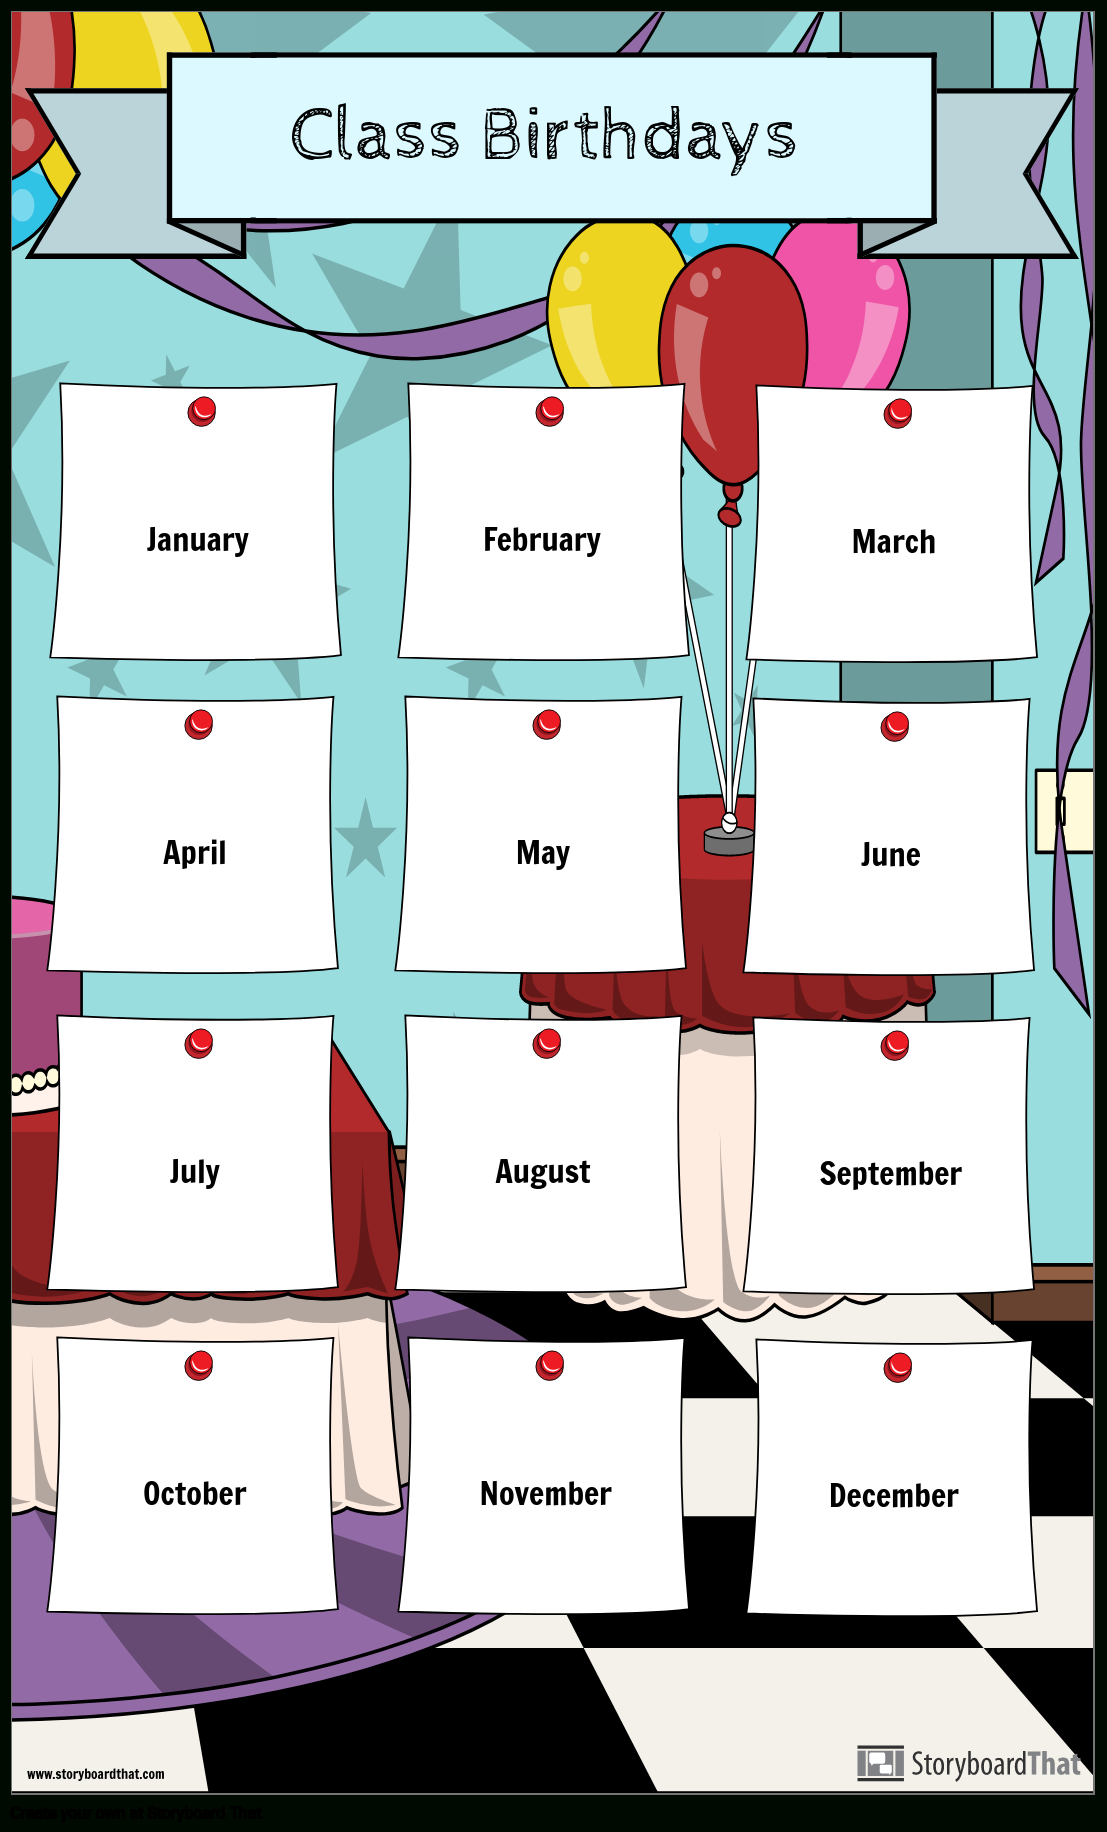 Classroom Birthday Calendar Storyboard By Postertemplates with regard to Classroom Birthday Calendar Template